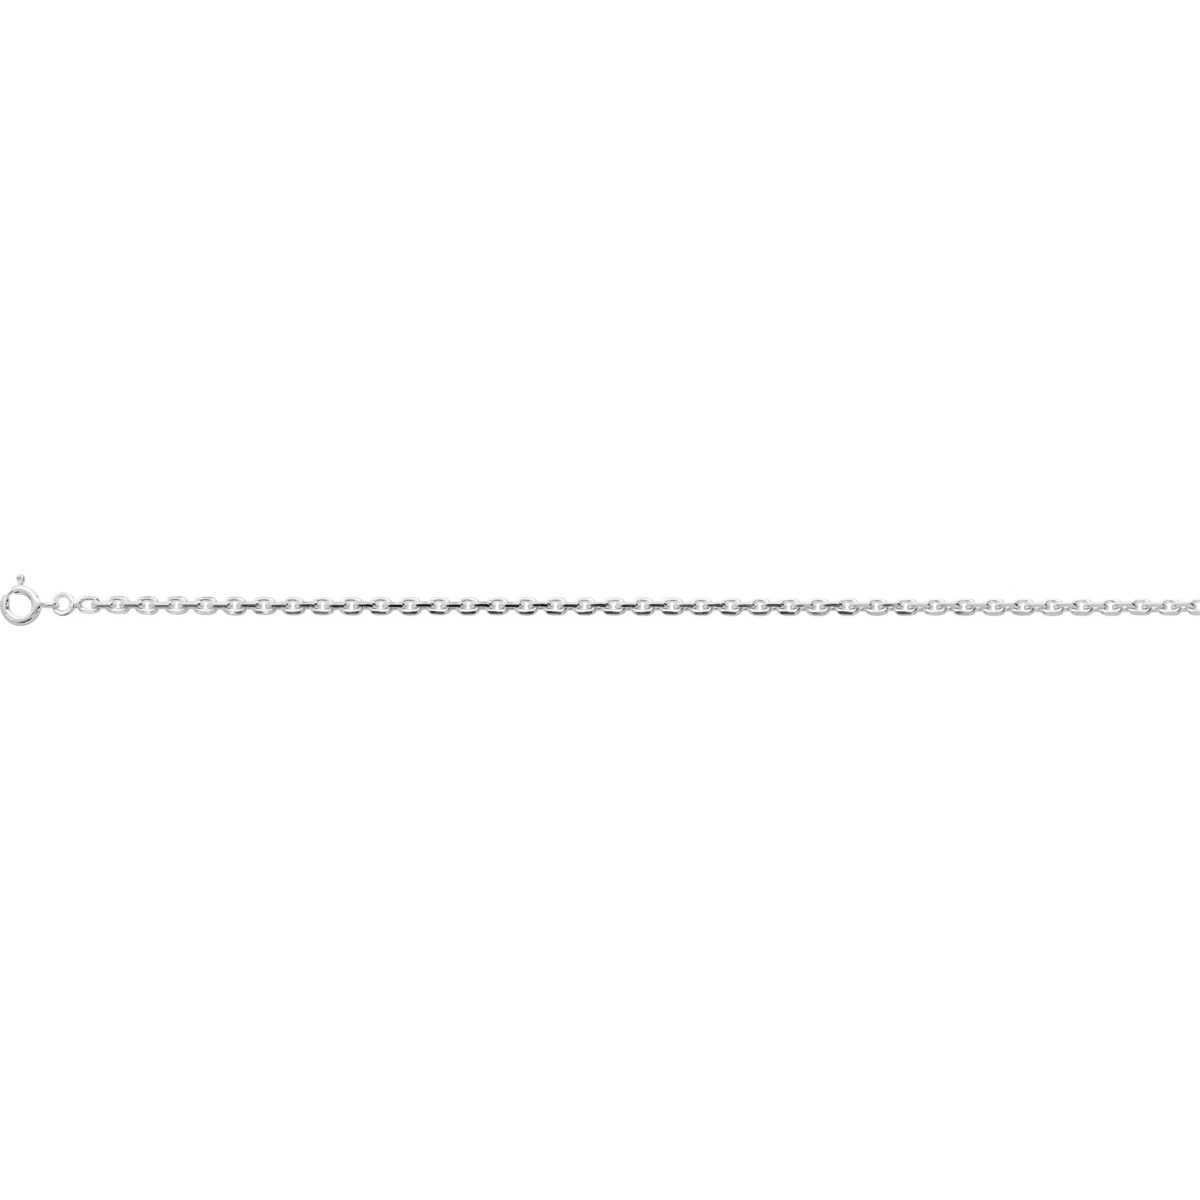 Necklace 'link chain' rh925 Silver - Size: 45  Lua Blanca  301478C.45